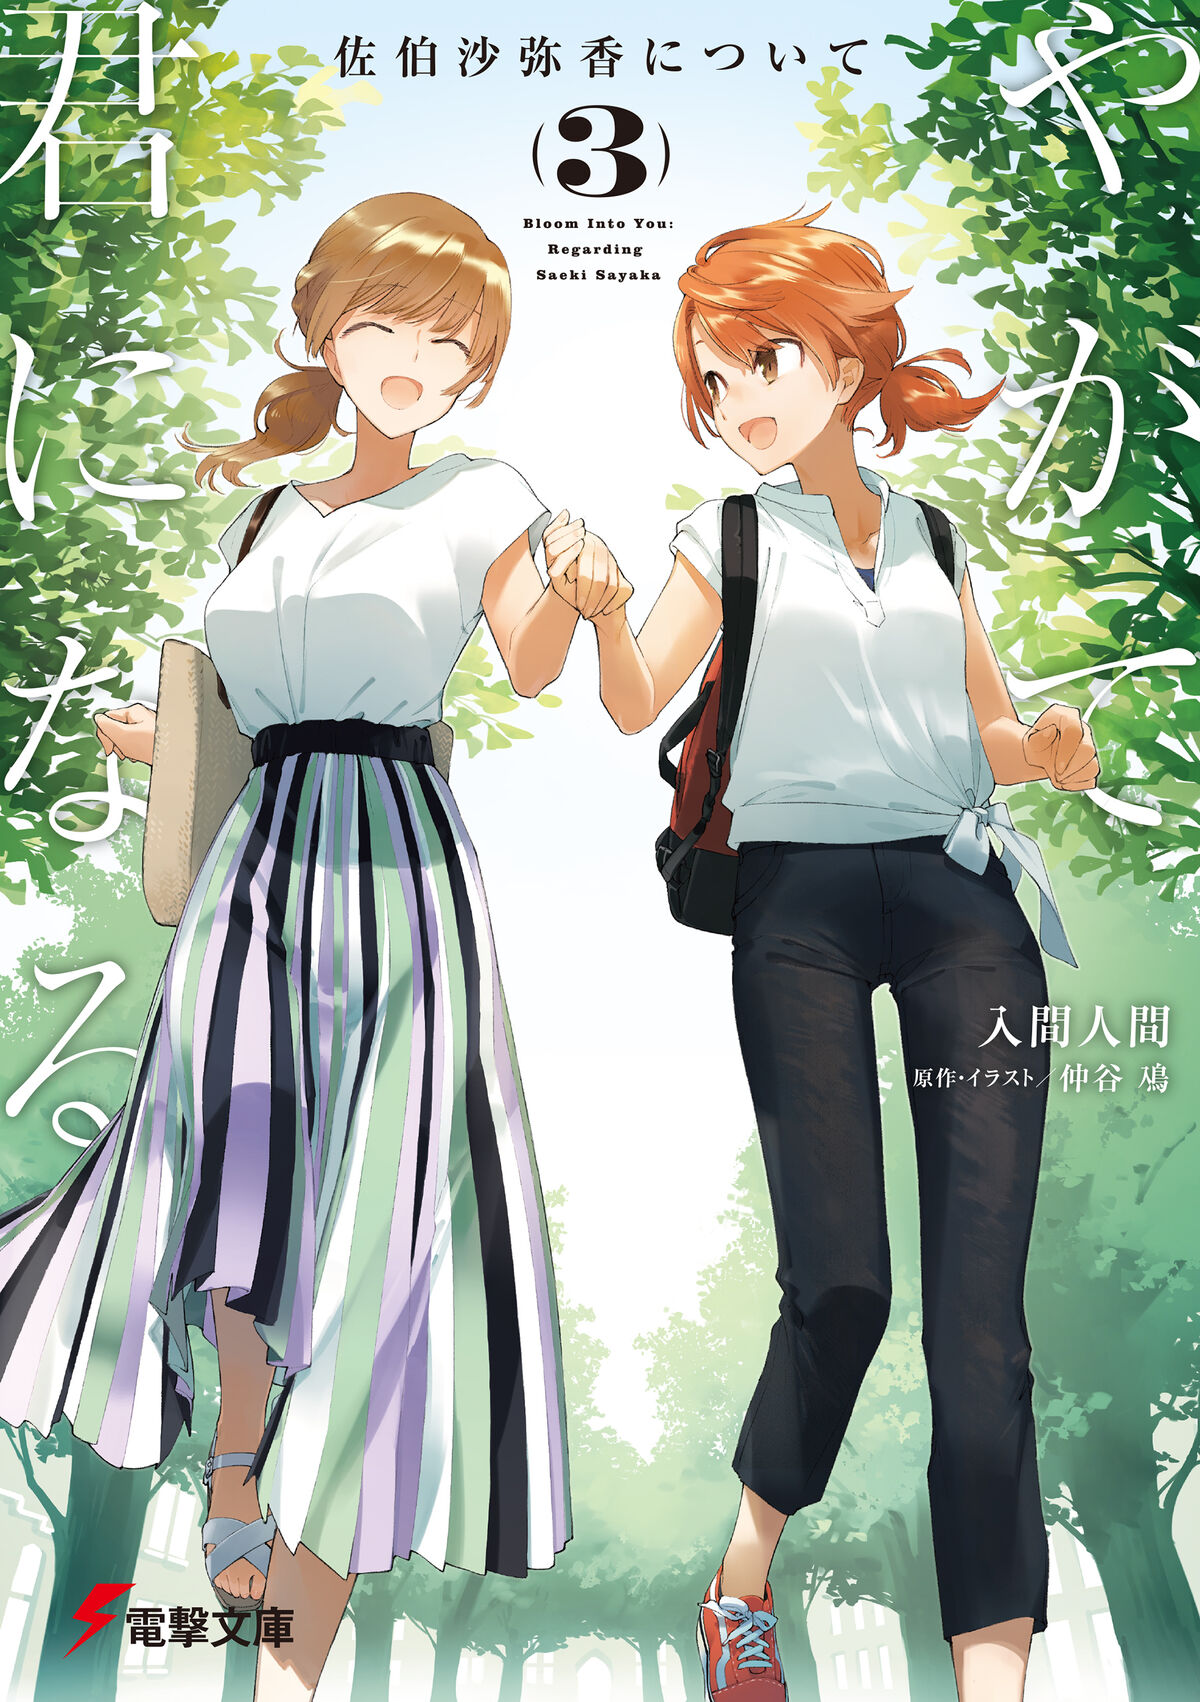 Bloom Into You: Regarding Saeki Sayaka – English Light Novels